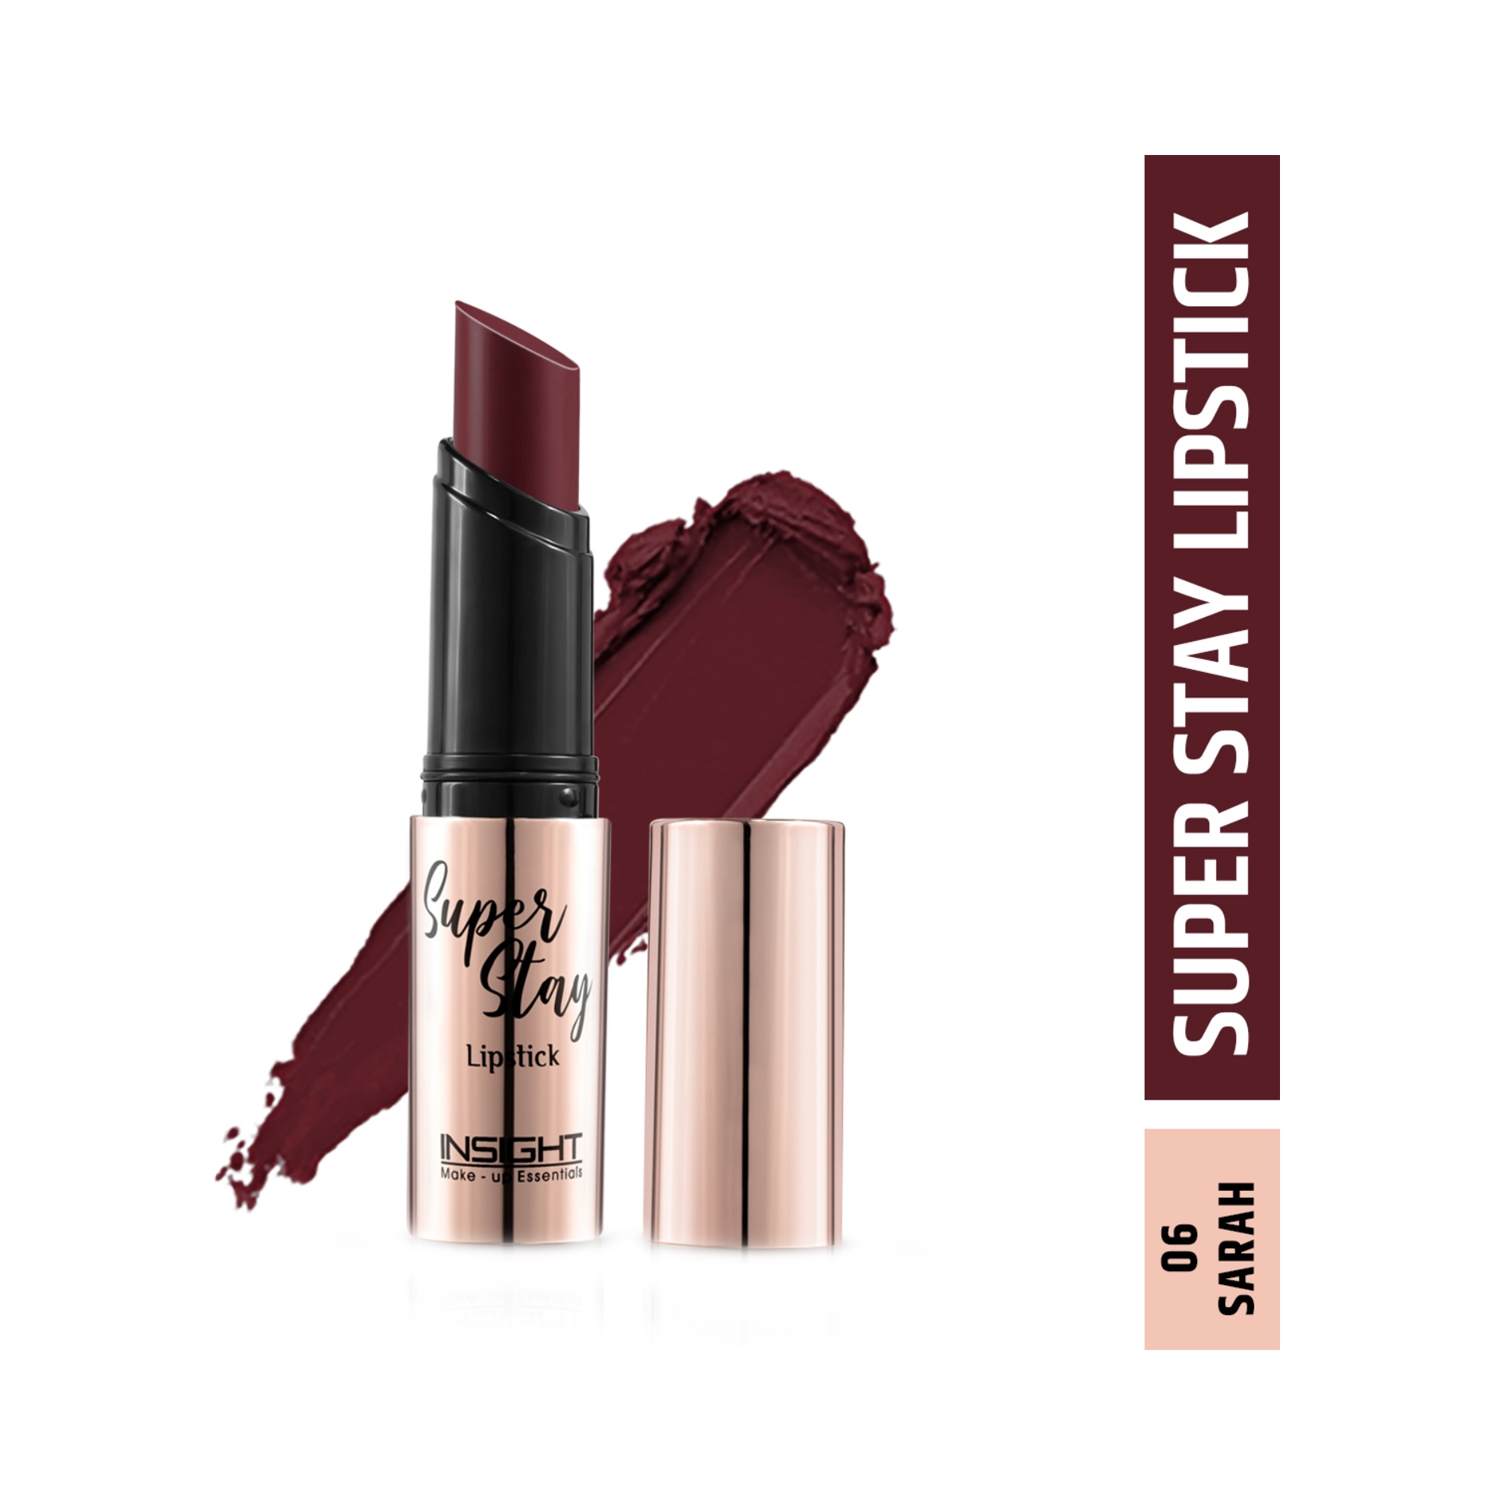 Insight Cosmetics Super Stay Lipstick - 06 Sarah (7g)